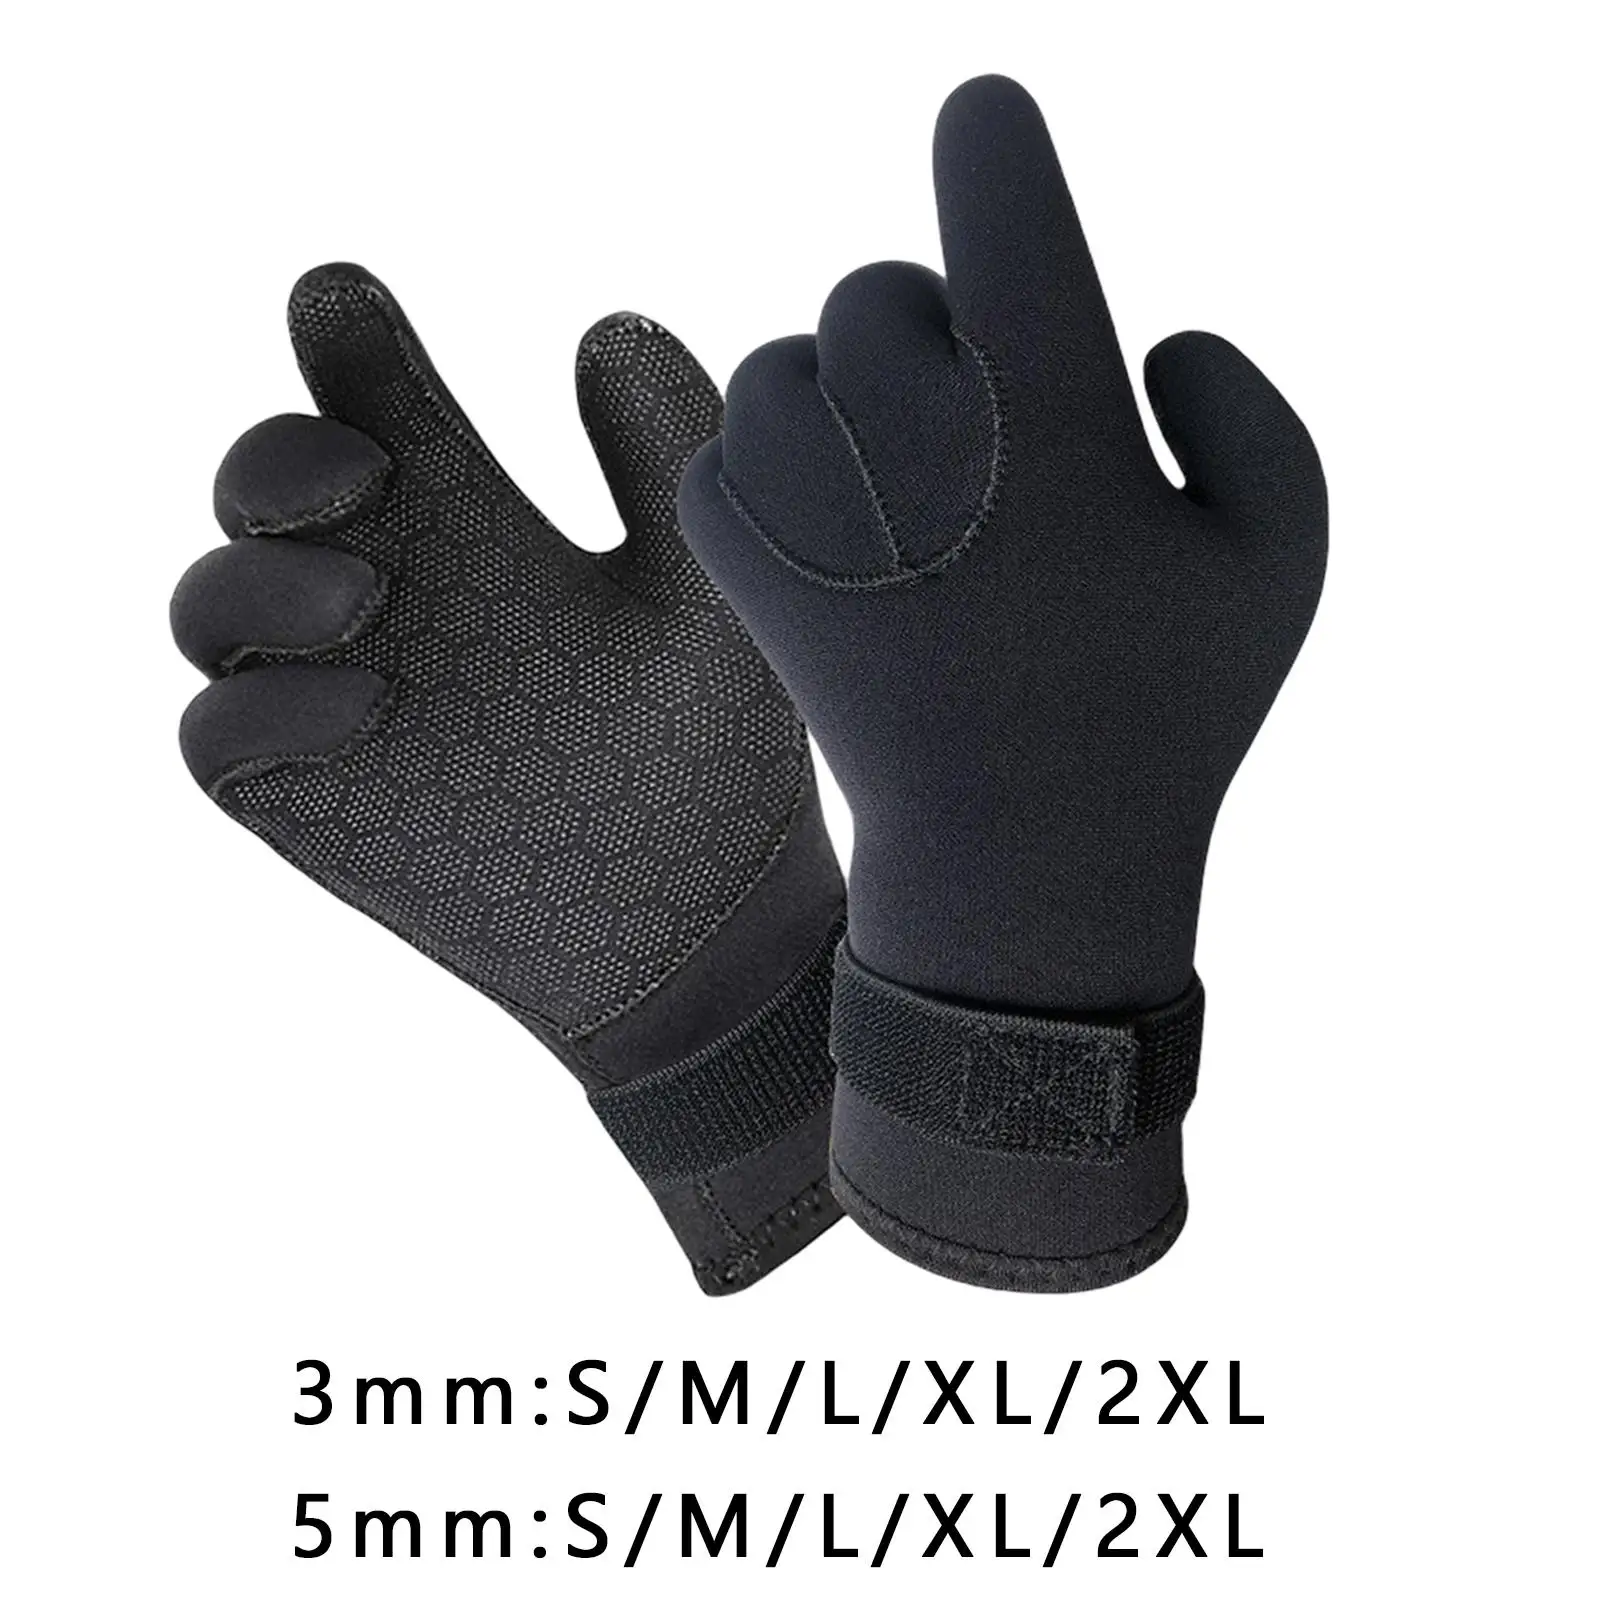 Scuba Diving Gloves Warm Wetsuit Winter Gloves Warm Dive Gloves Five Finger Wetsuit Gloves for Snorkeling Kayaking Water Sports